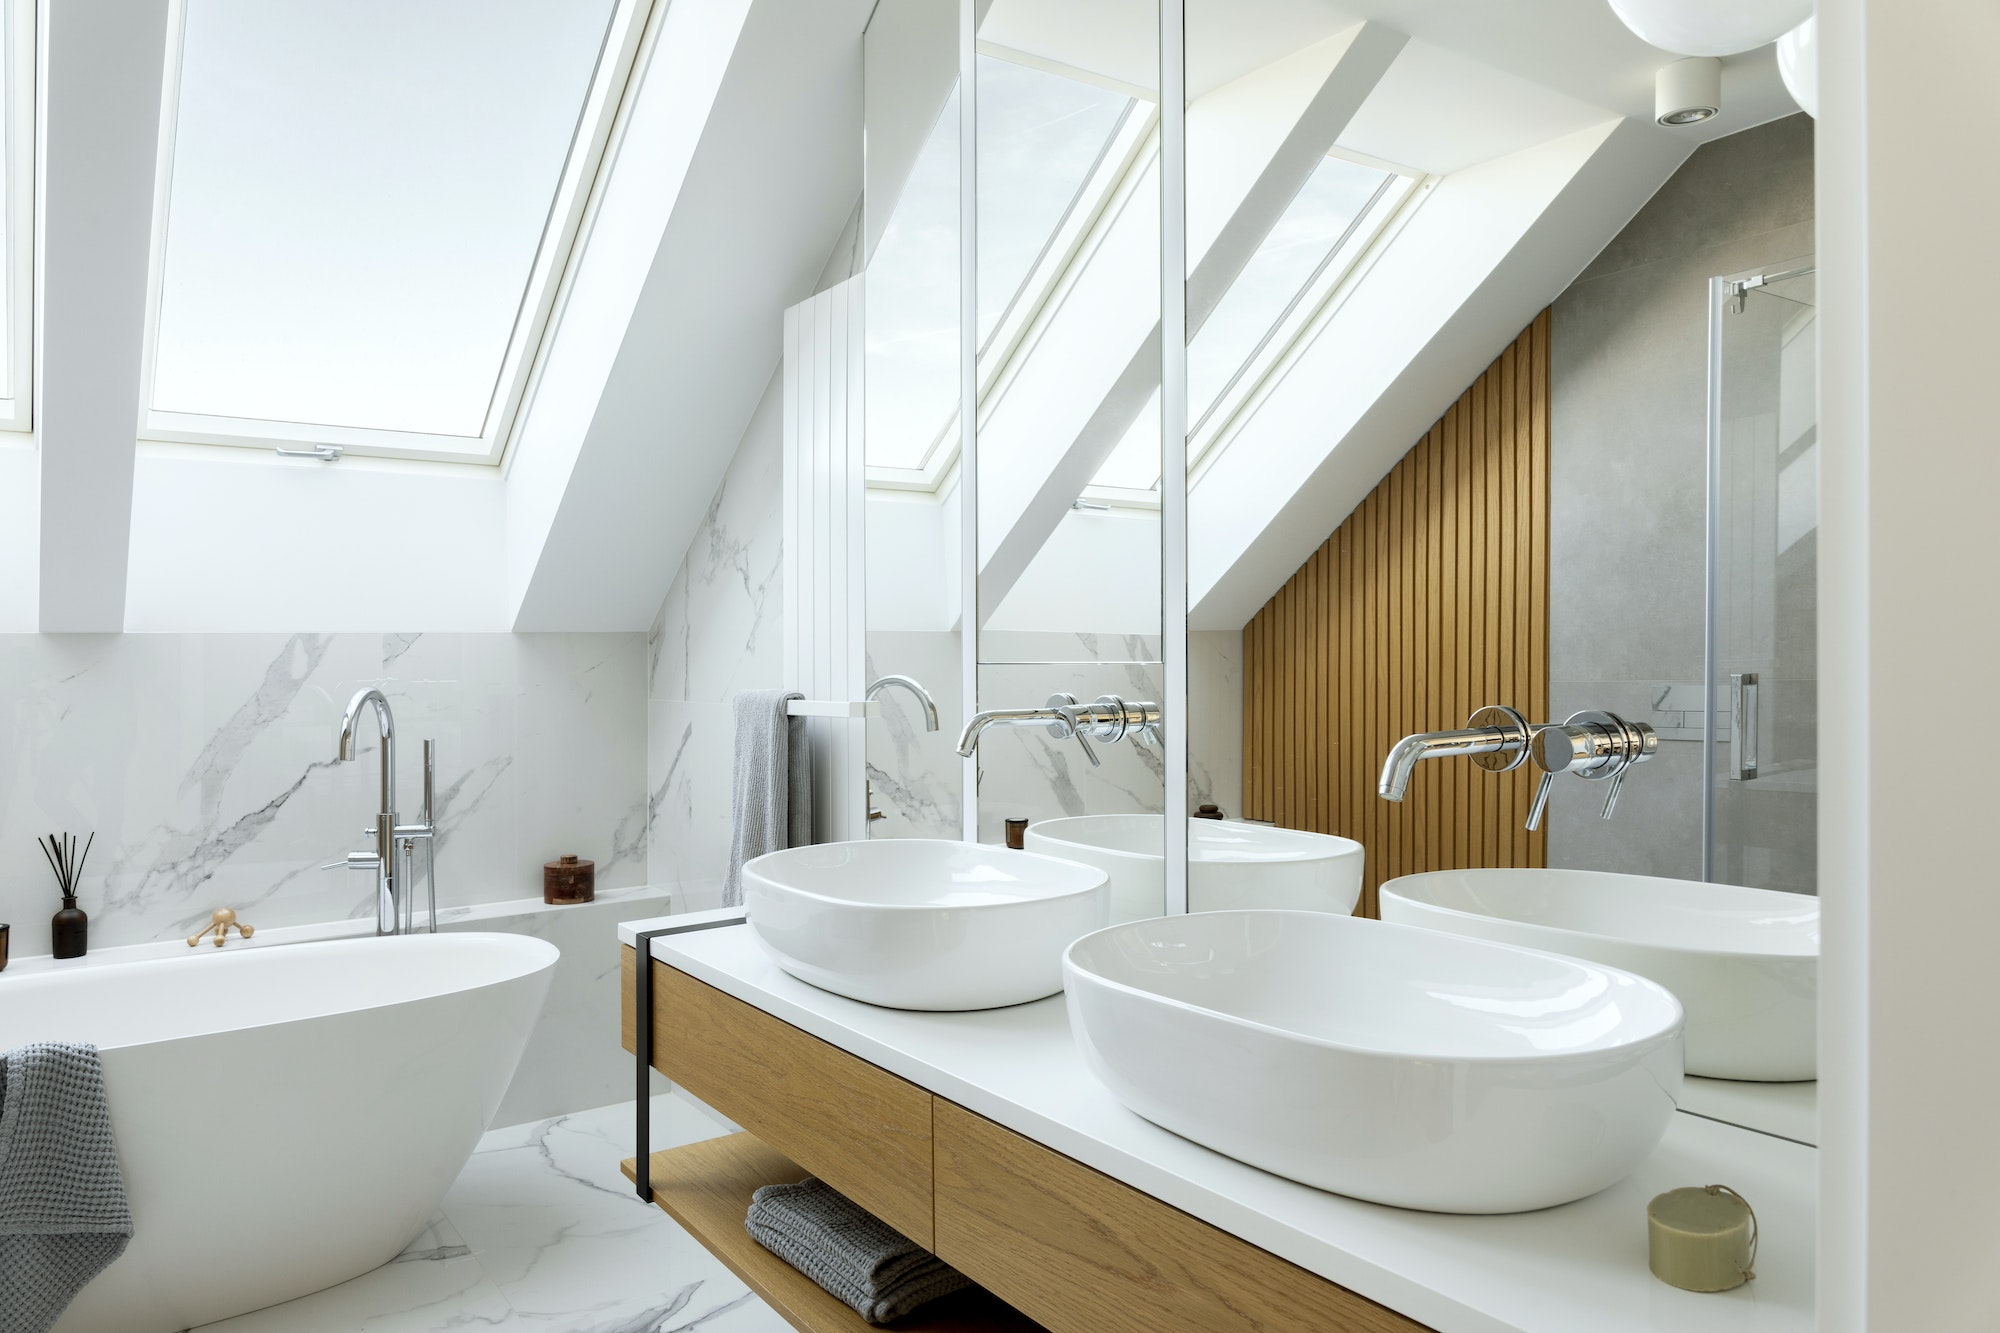 Stylish bathroom interior design